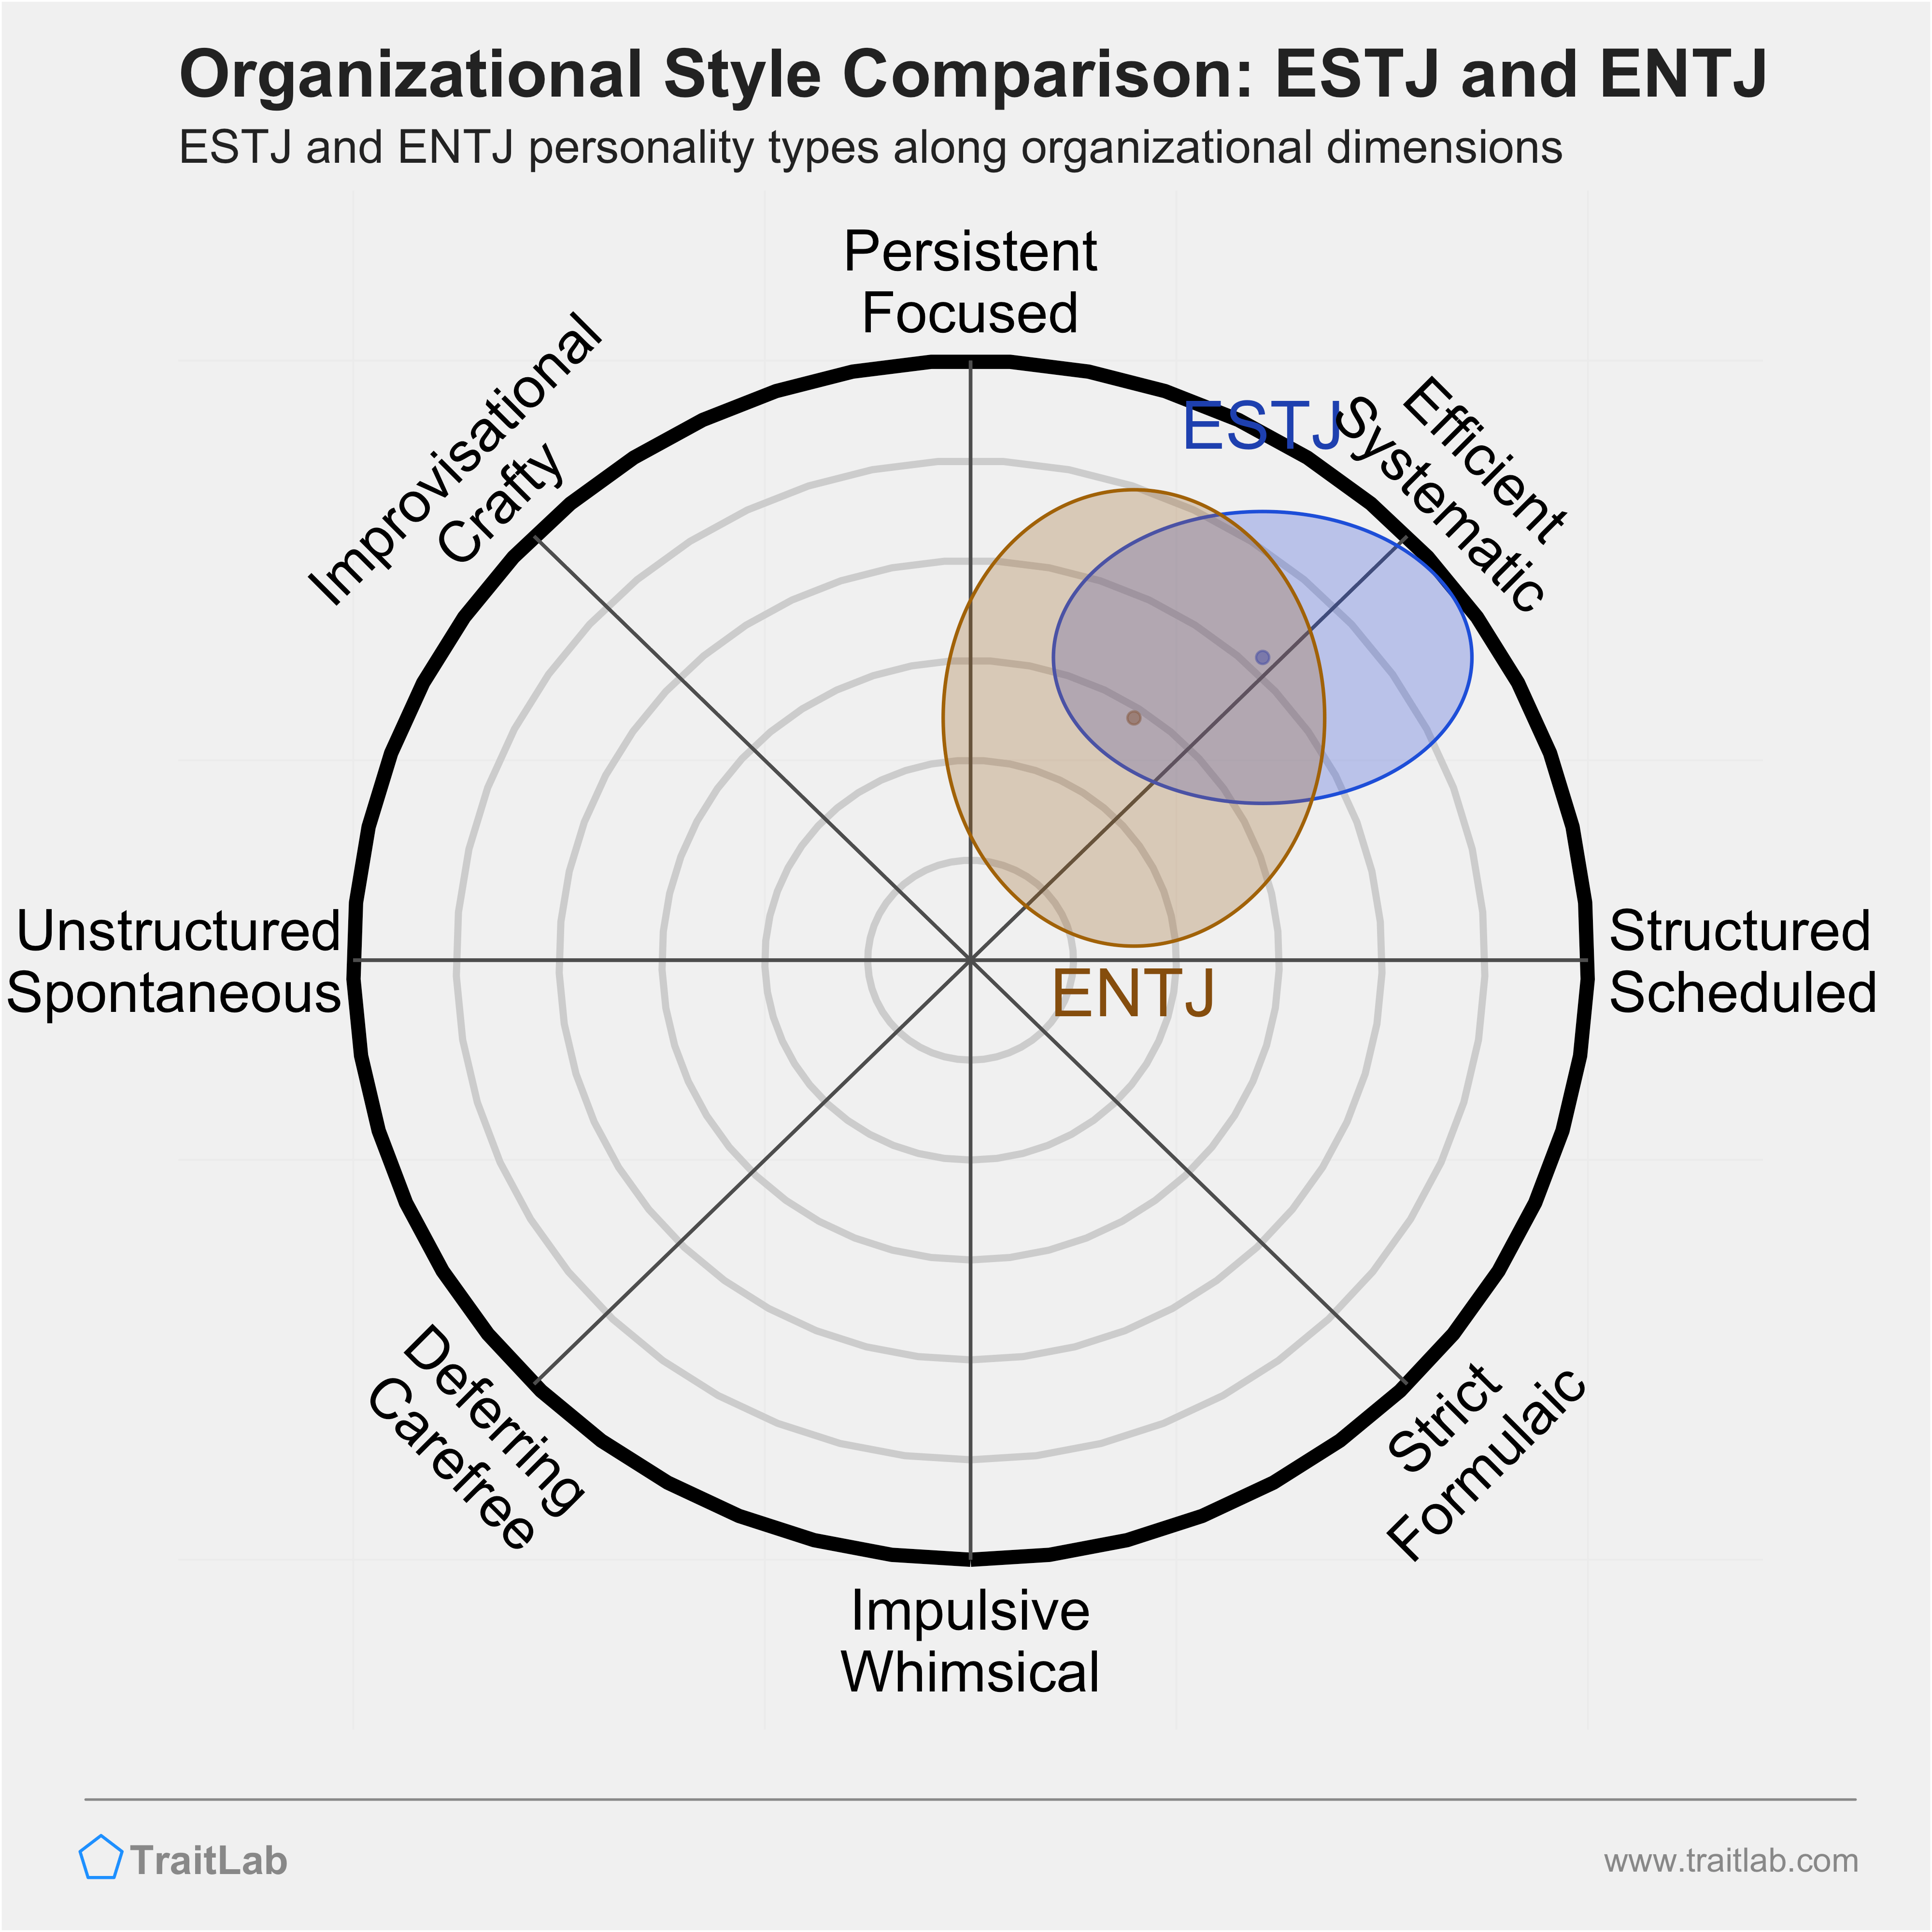 ESTJ and ENTJ comparison across organizational dimensions